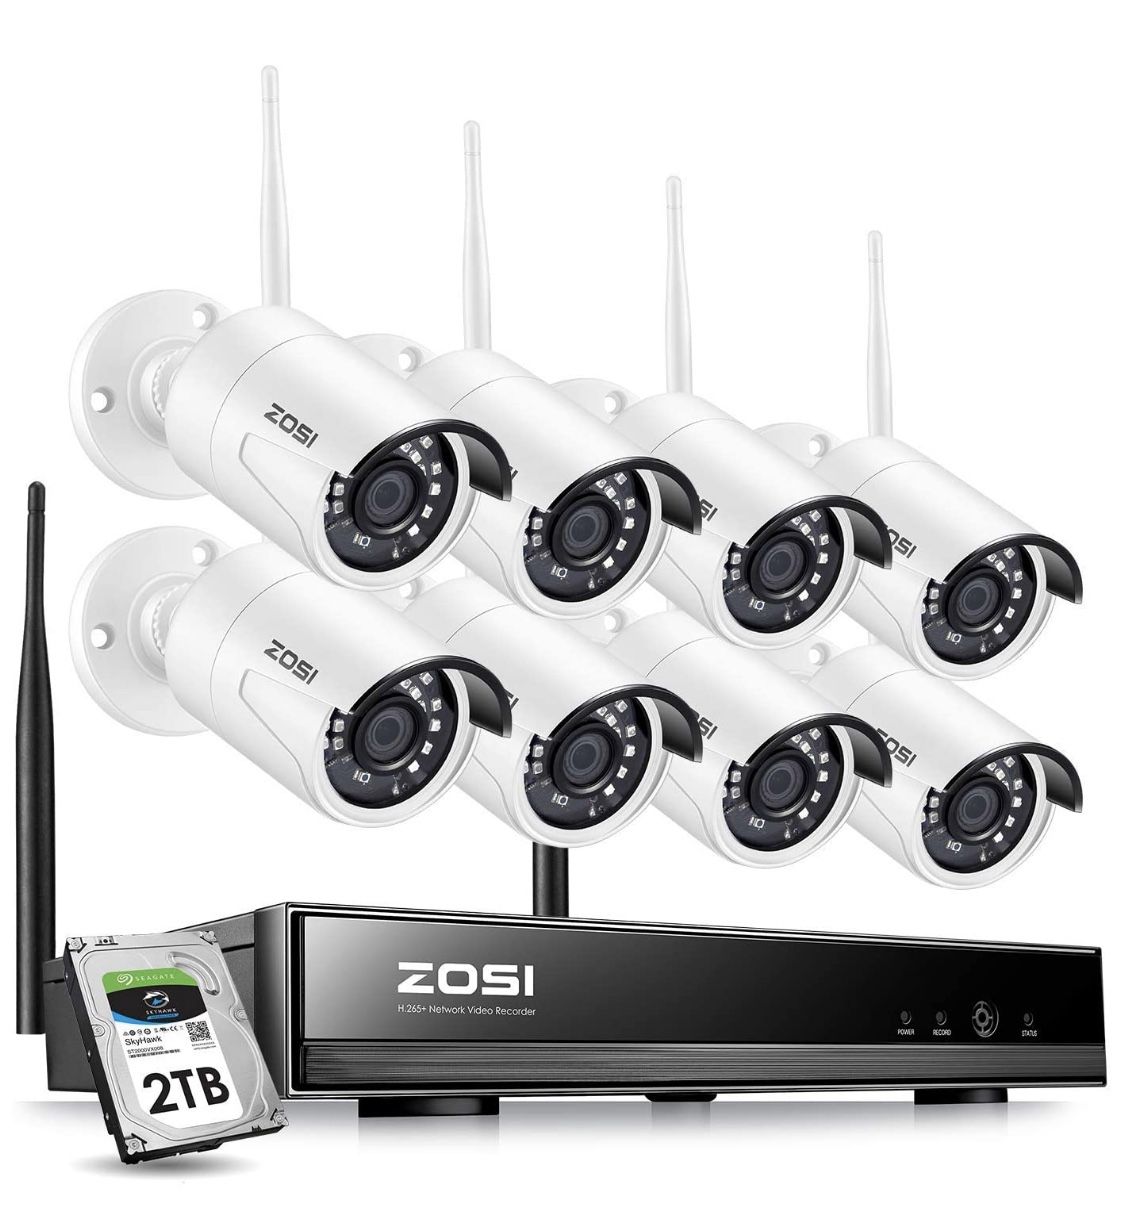 Zosi wireless security system 1080p 8 cameras 2Tb